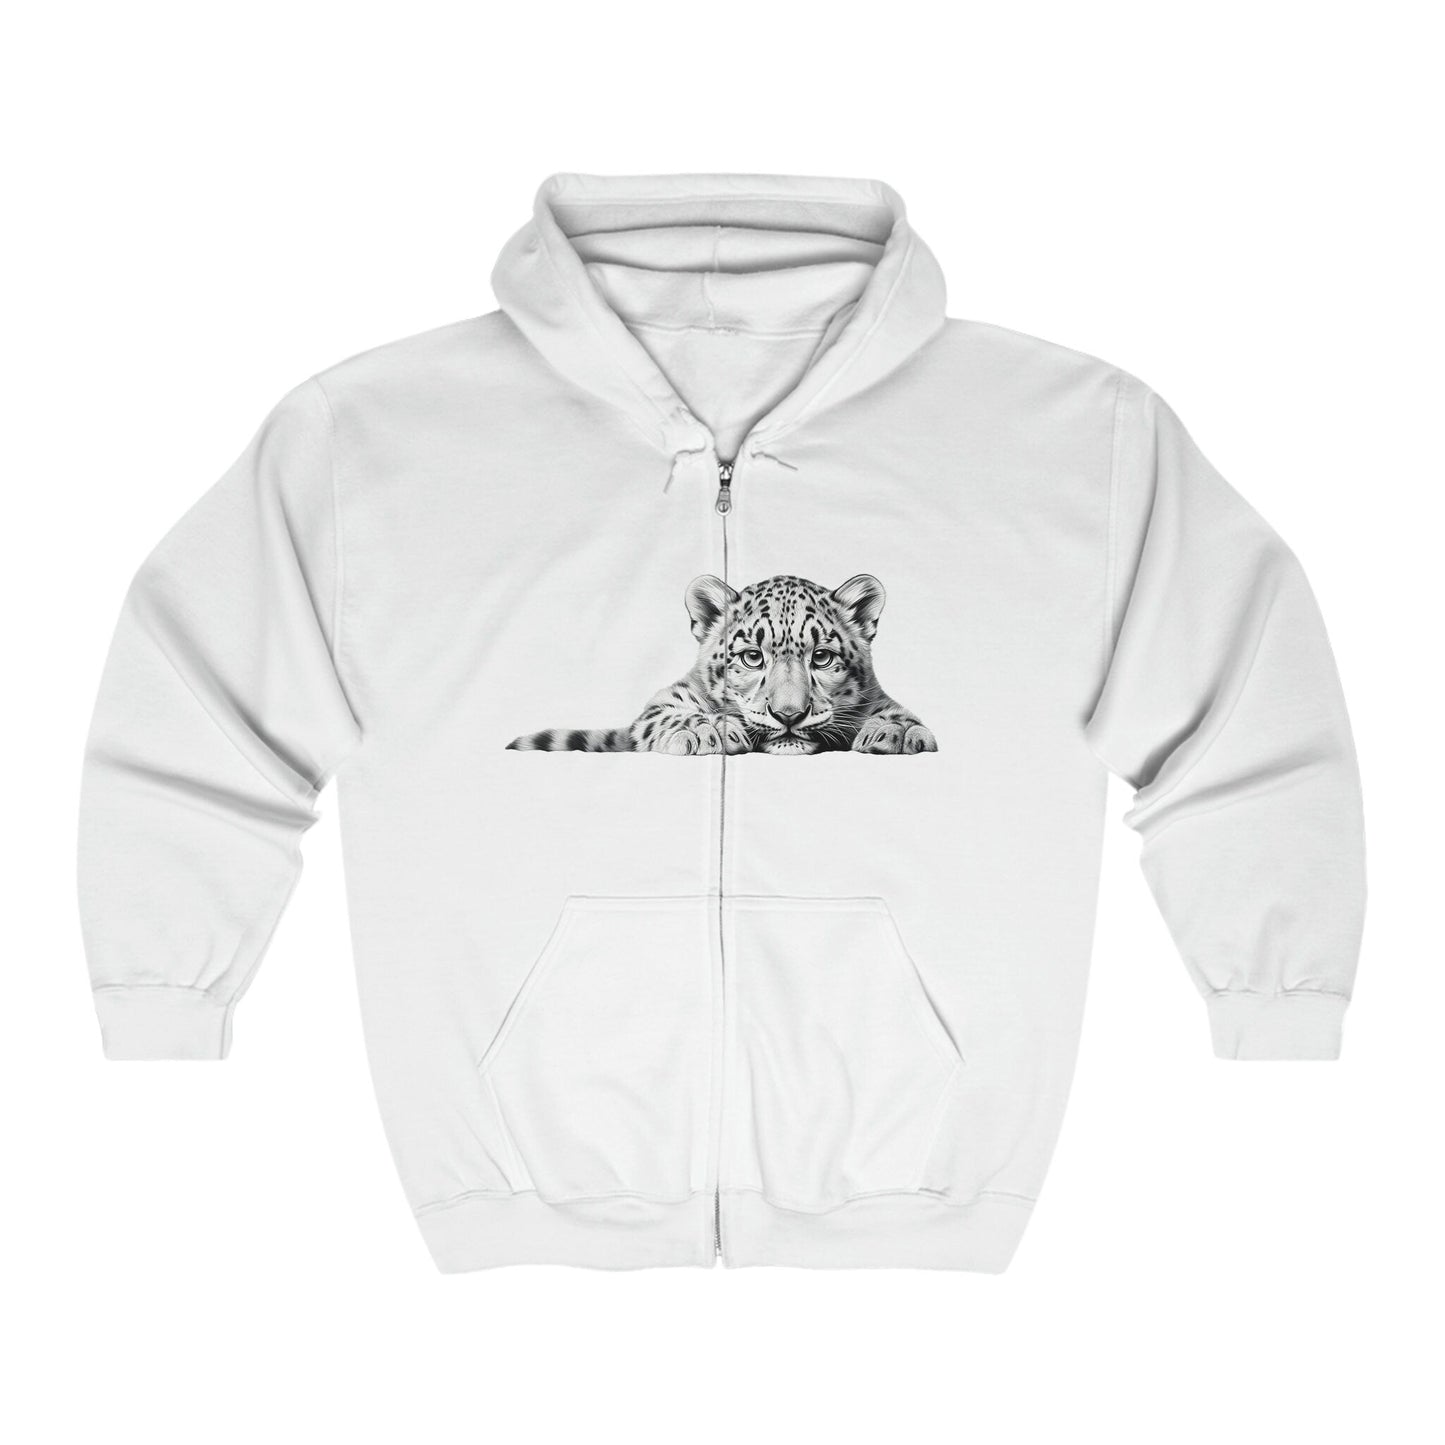 Snow Leopard Full Zip Hoodie or Sweatshirt, Jacket with Spotted Leopard, Wild Life Shirt - FlooredByArt